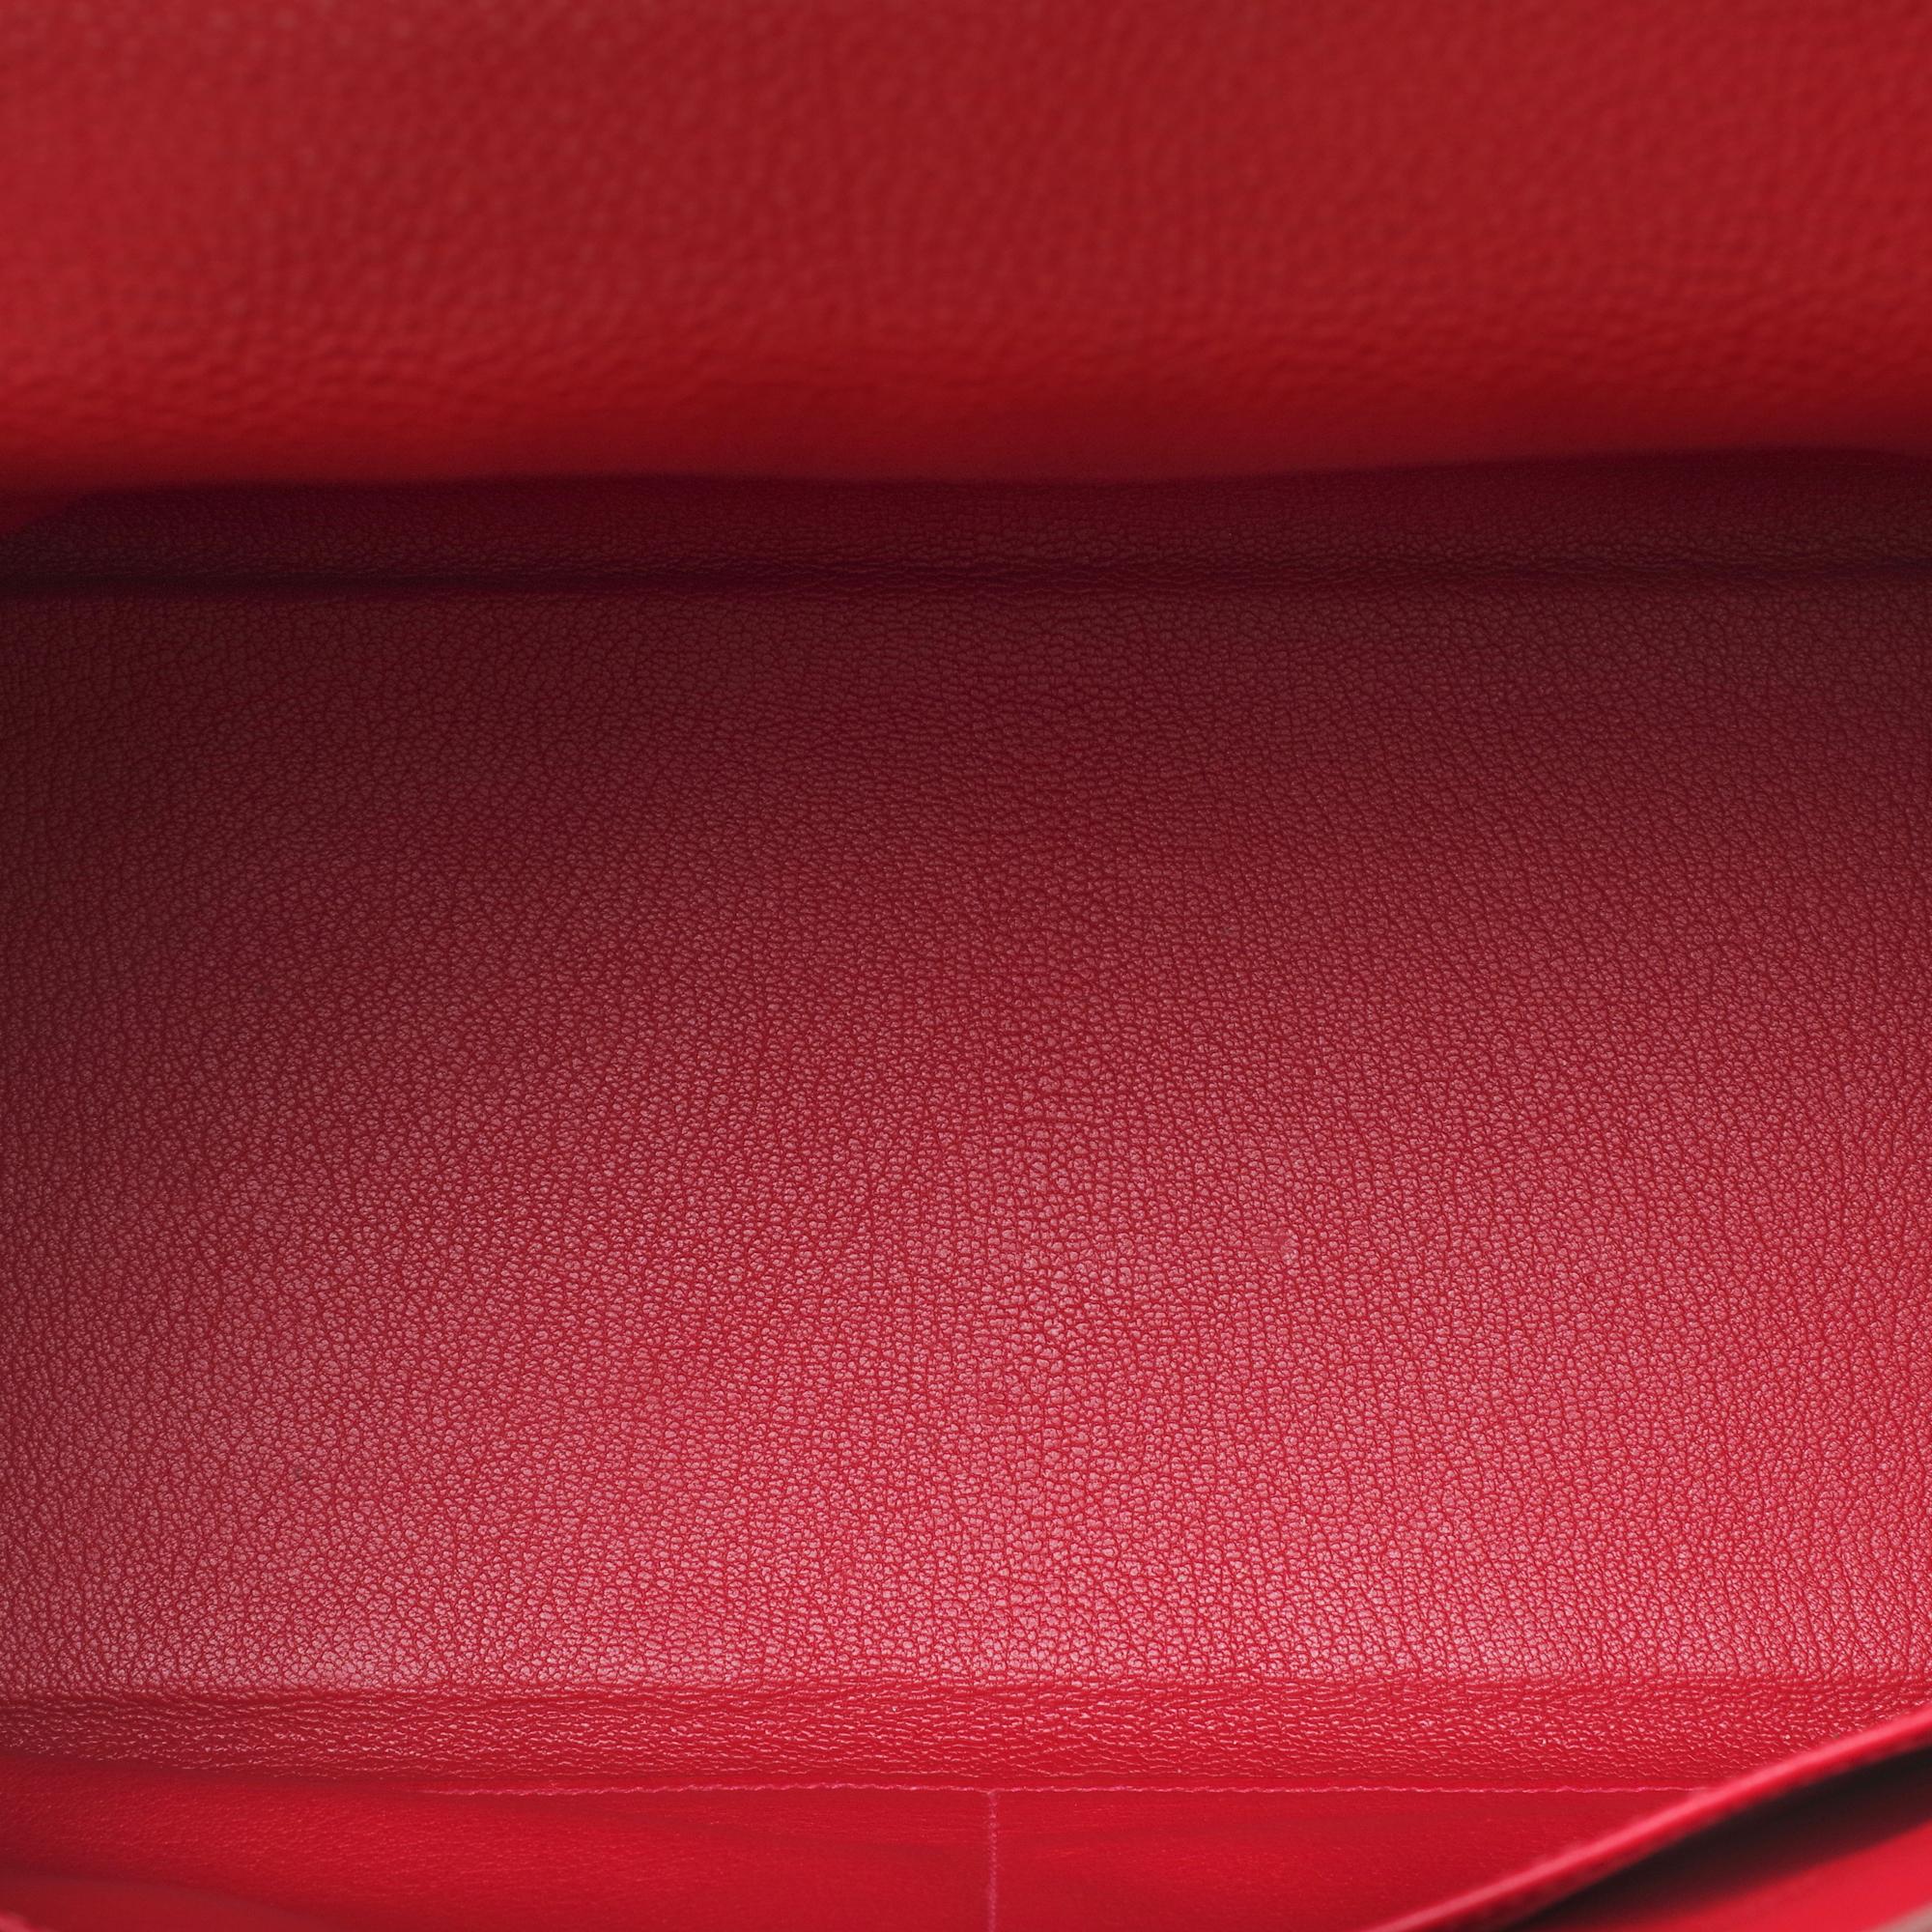 Rare Hermès Kelly 35 sellier shoulder bag in red togo leather, silver hardware 2